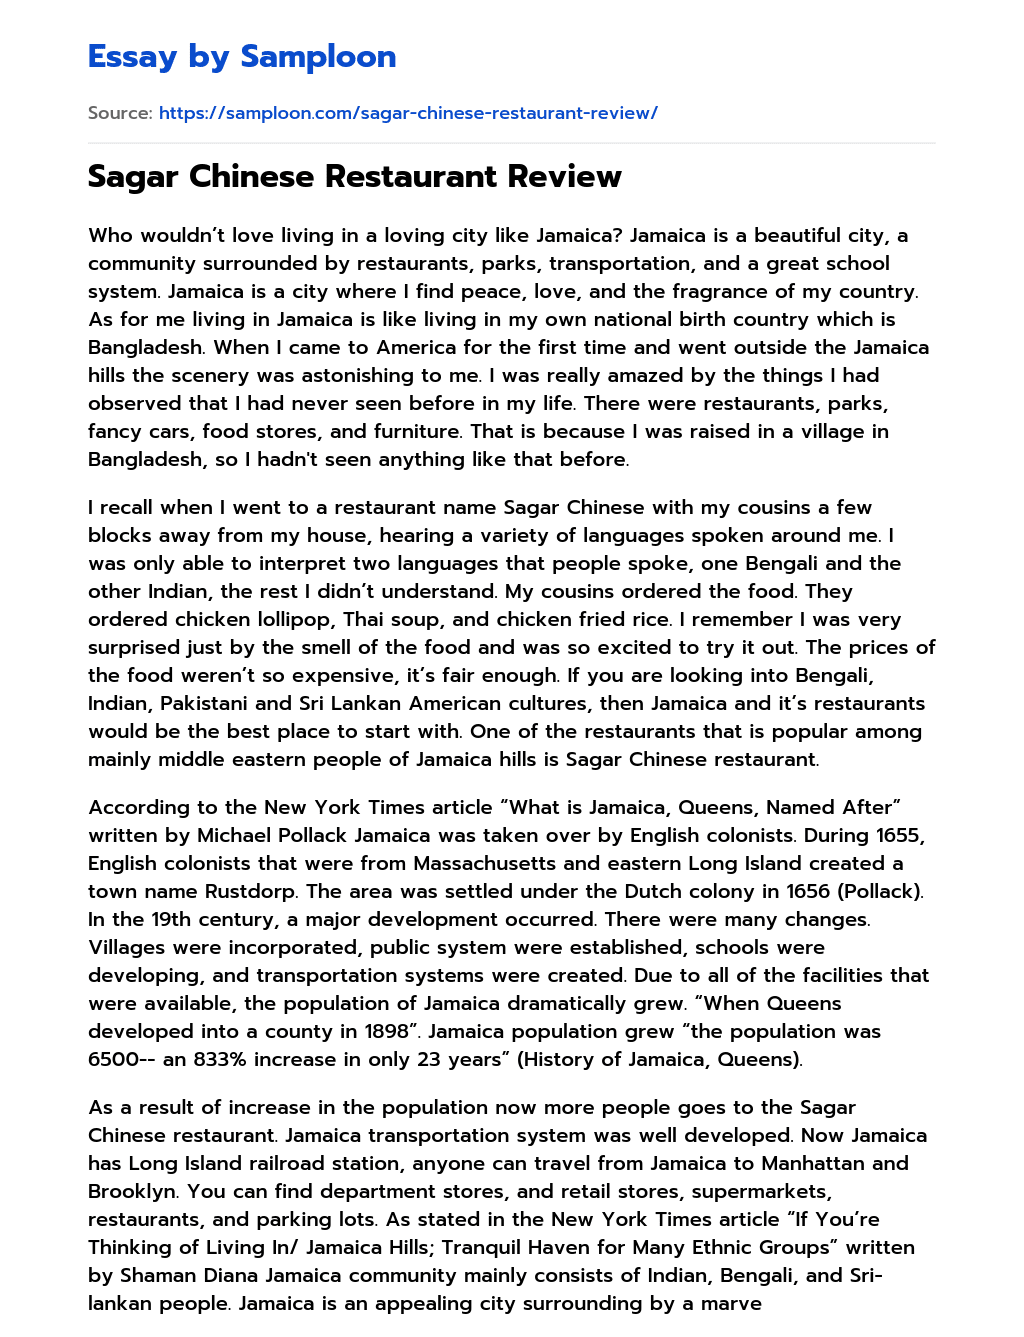 Sagar Chinese Restaurant Review essay